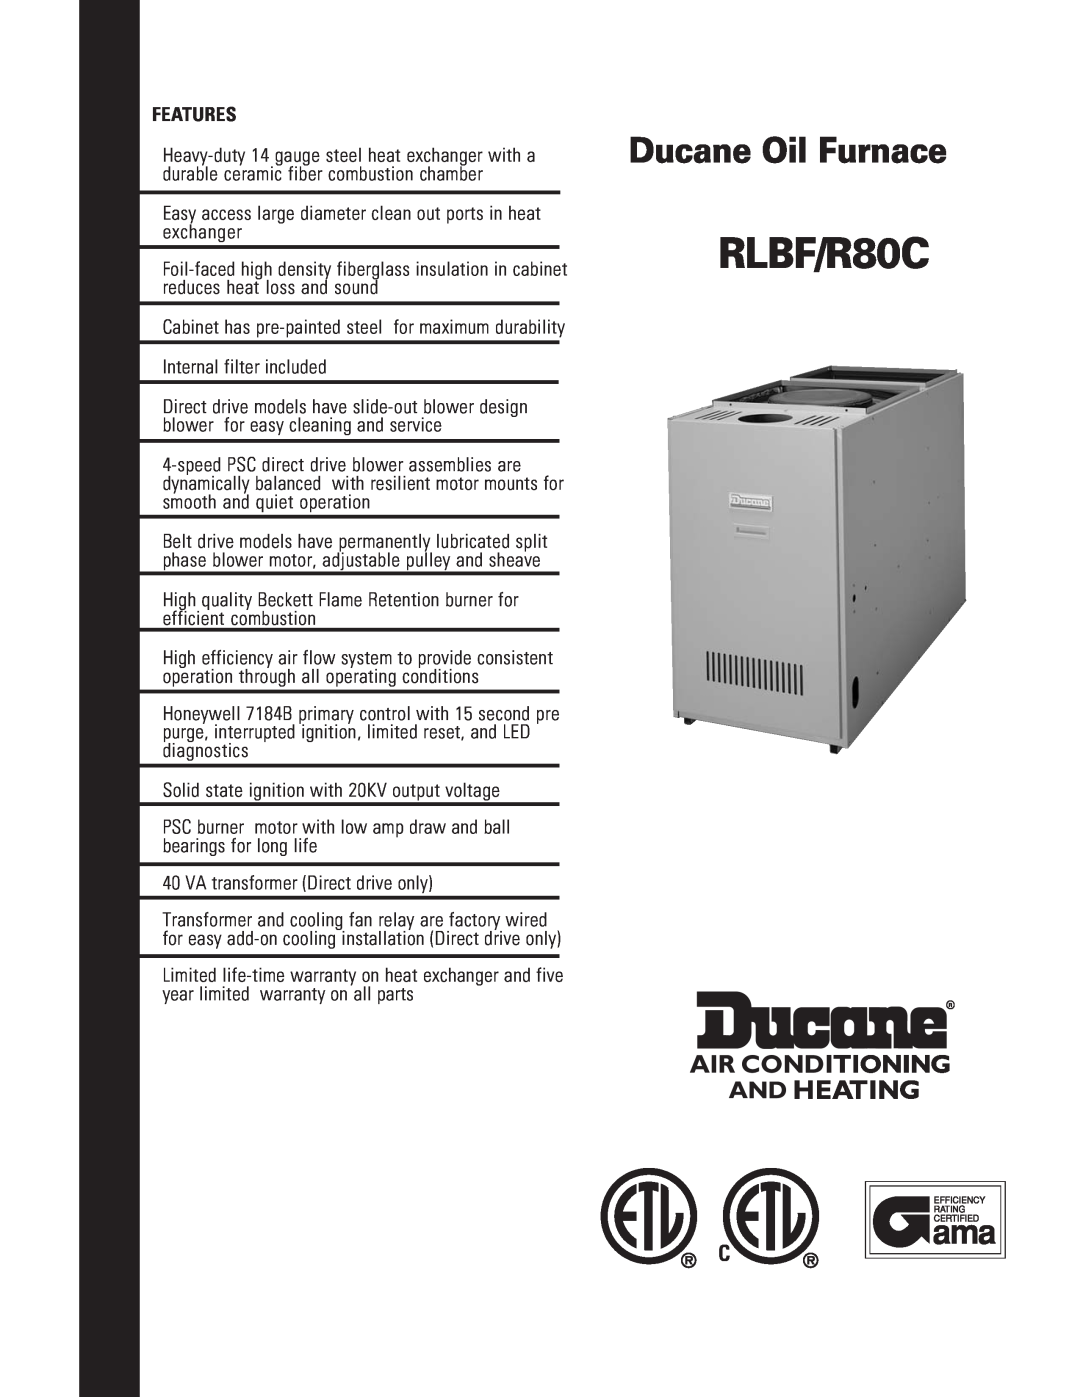 Ducane (HVAC) RLBF/R80C warranty Ducane Oil Furnace, Features 